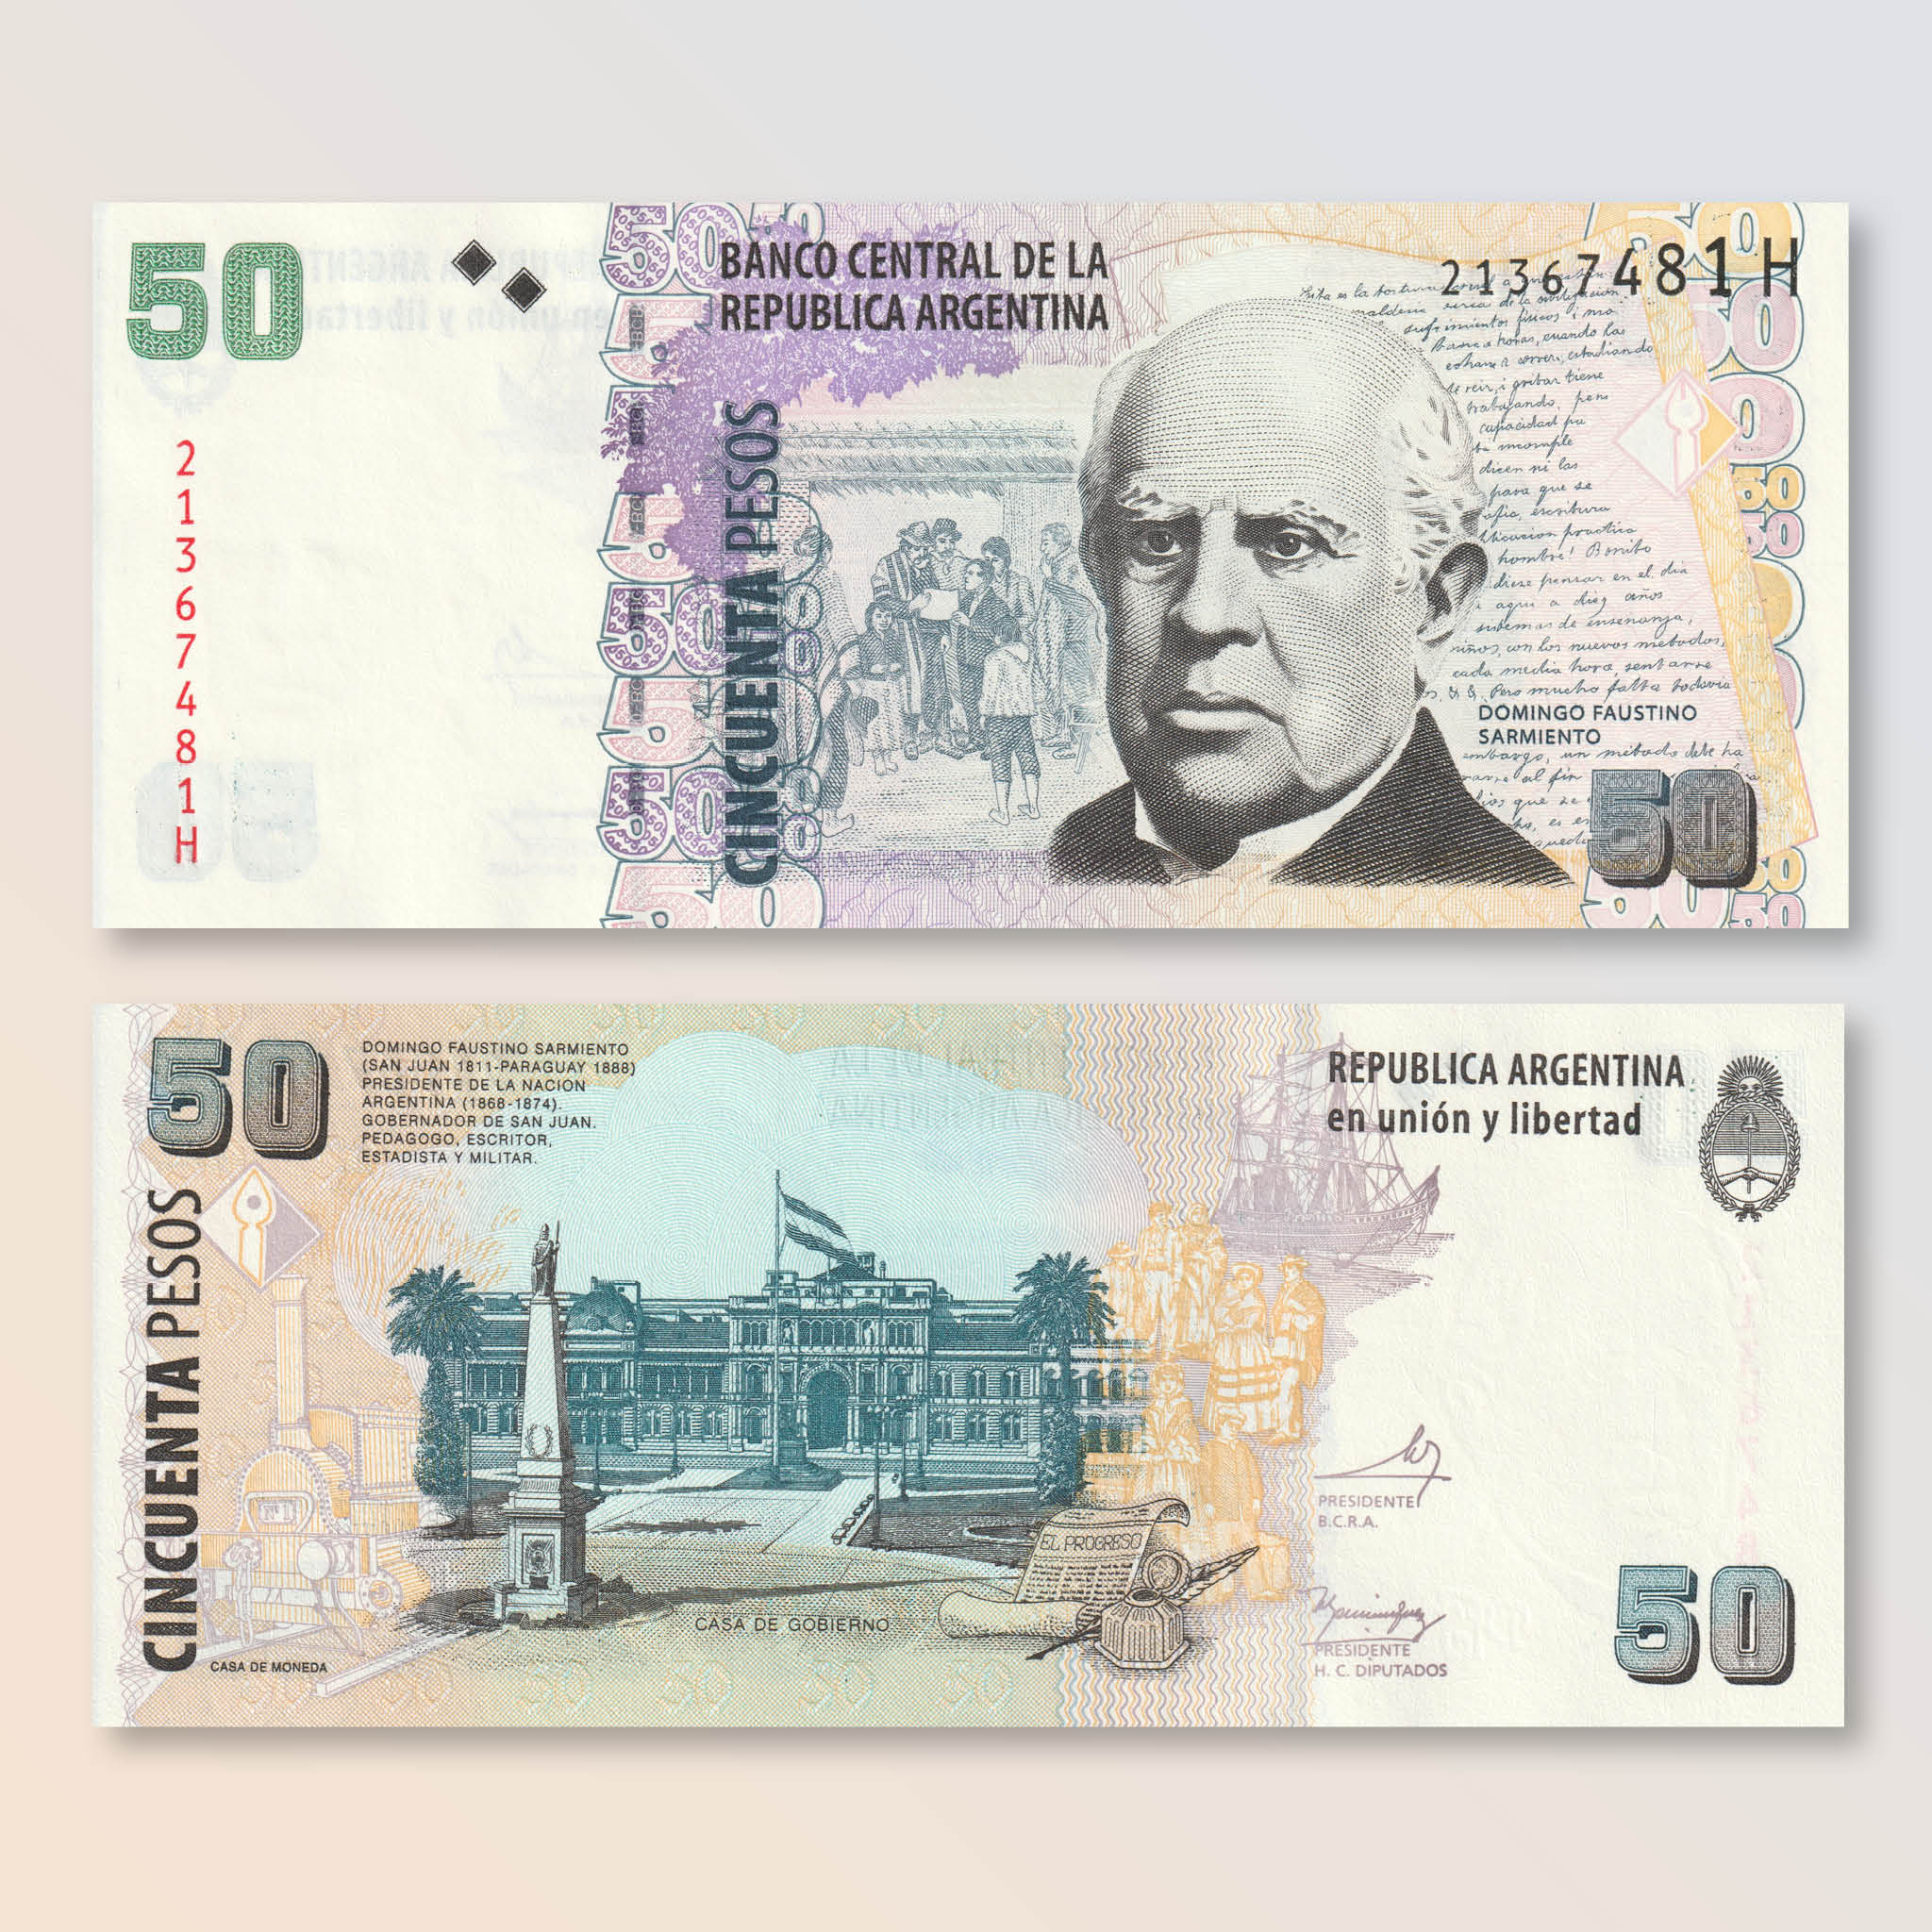 Argentina 50 Pesos, 2013, B409f, P356, UNC - Robert's World Money - World Banknotes